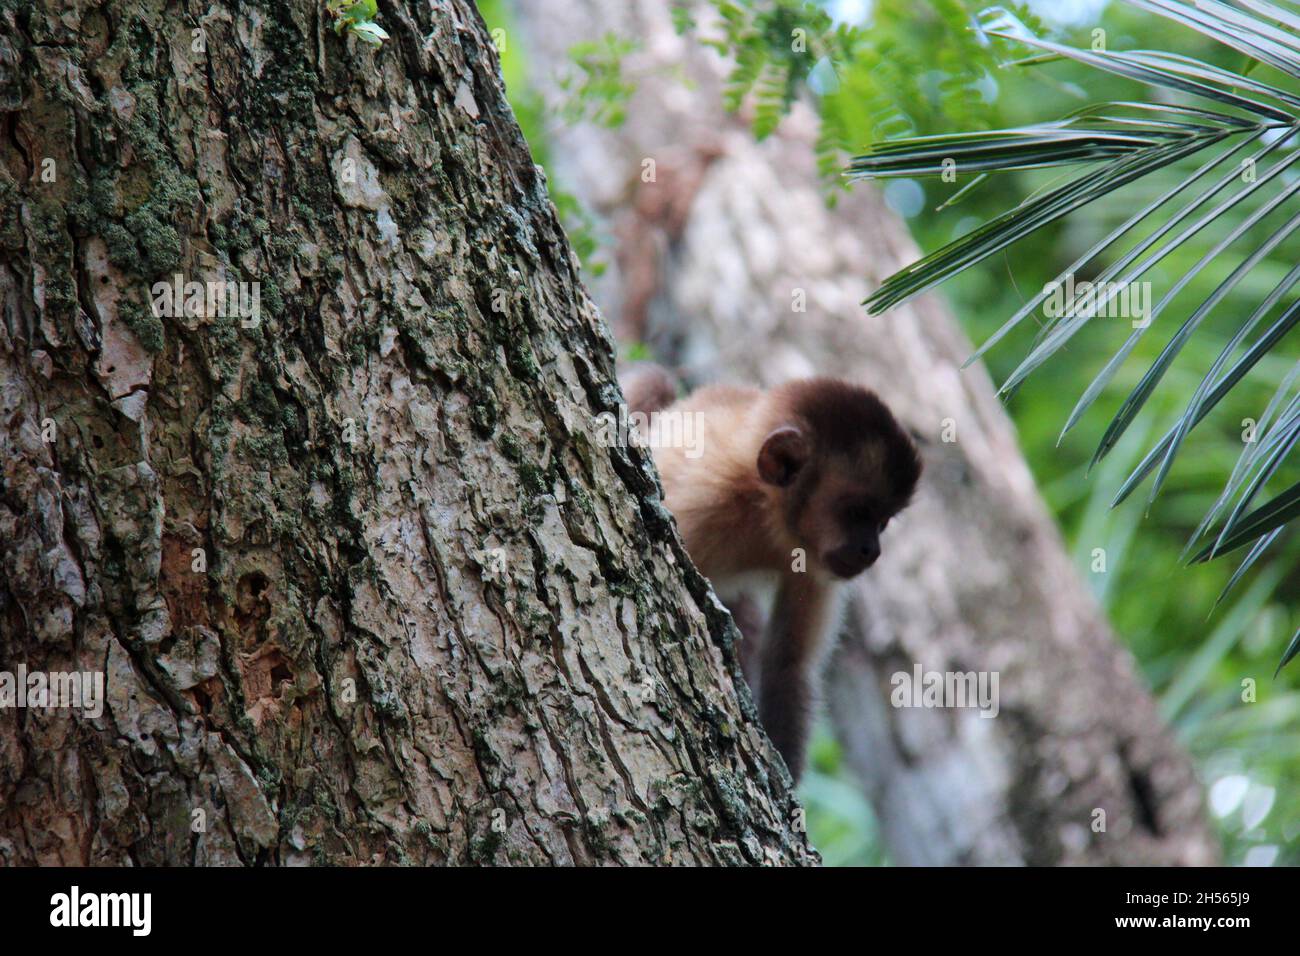 Baby Affe, unter den Baumstämmen, sehr neugierig, Bonito - Mato Grosso do Sul - Brasilien. Stockfoto